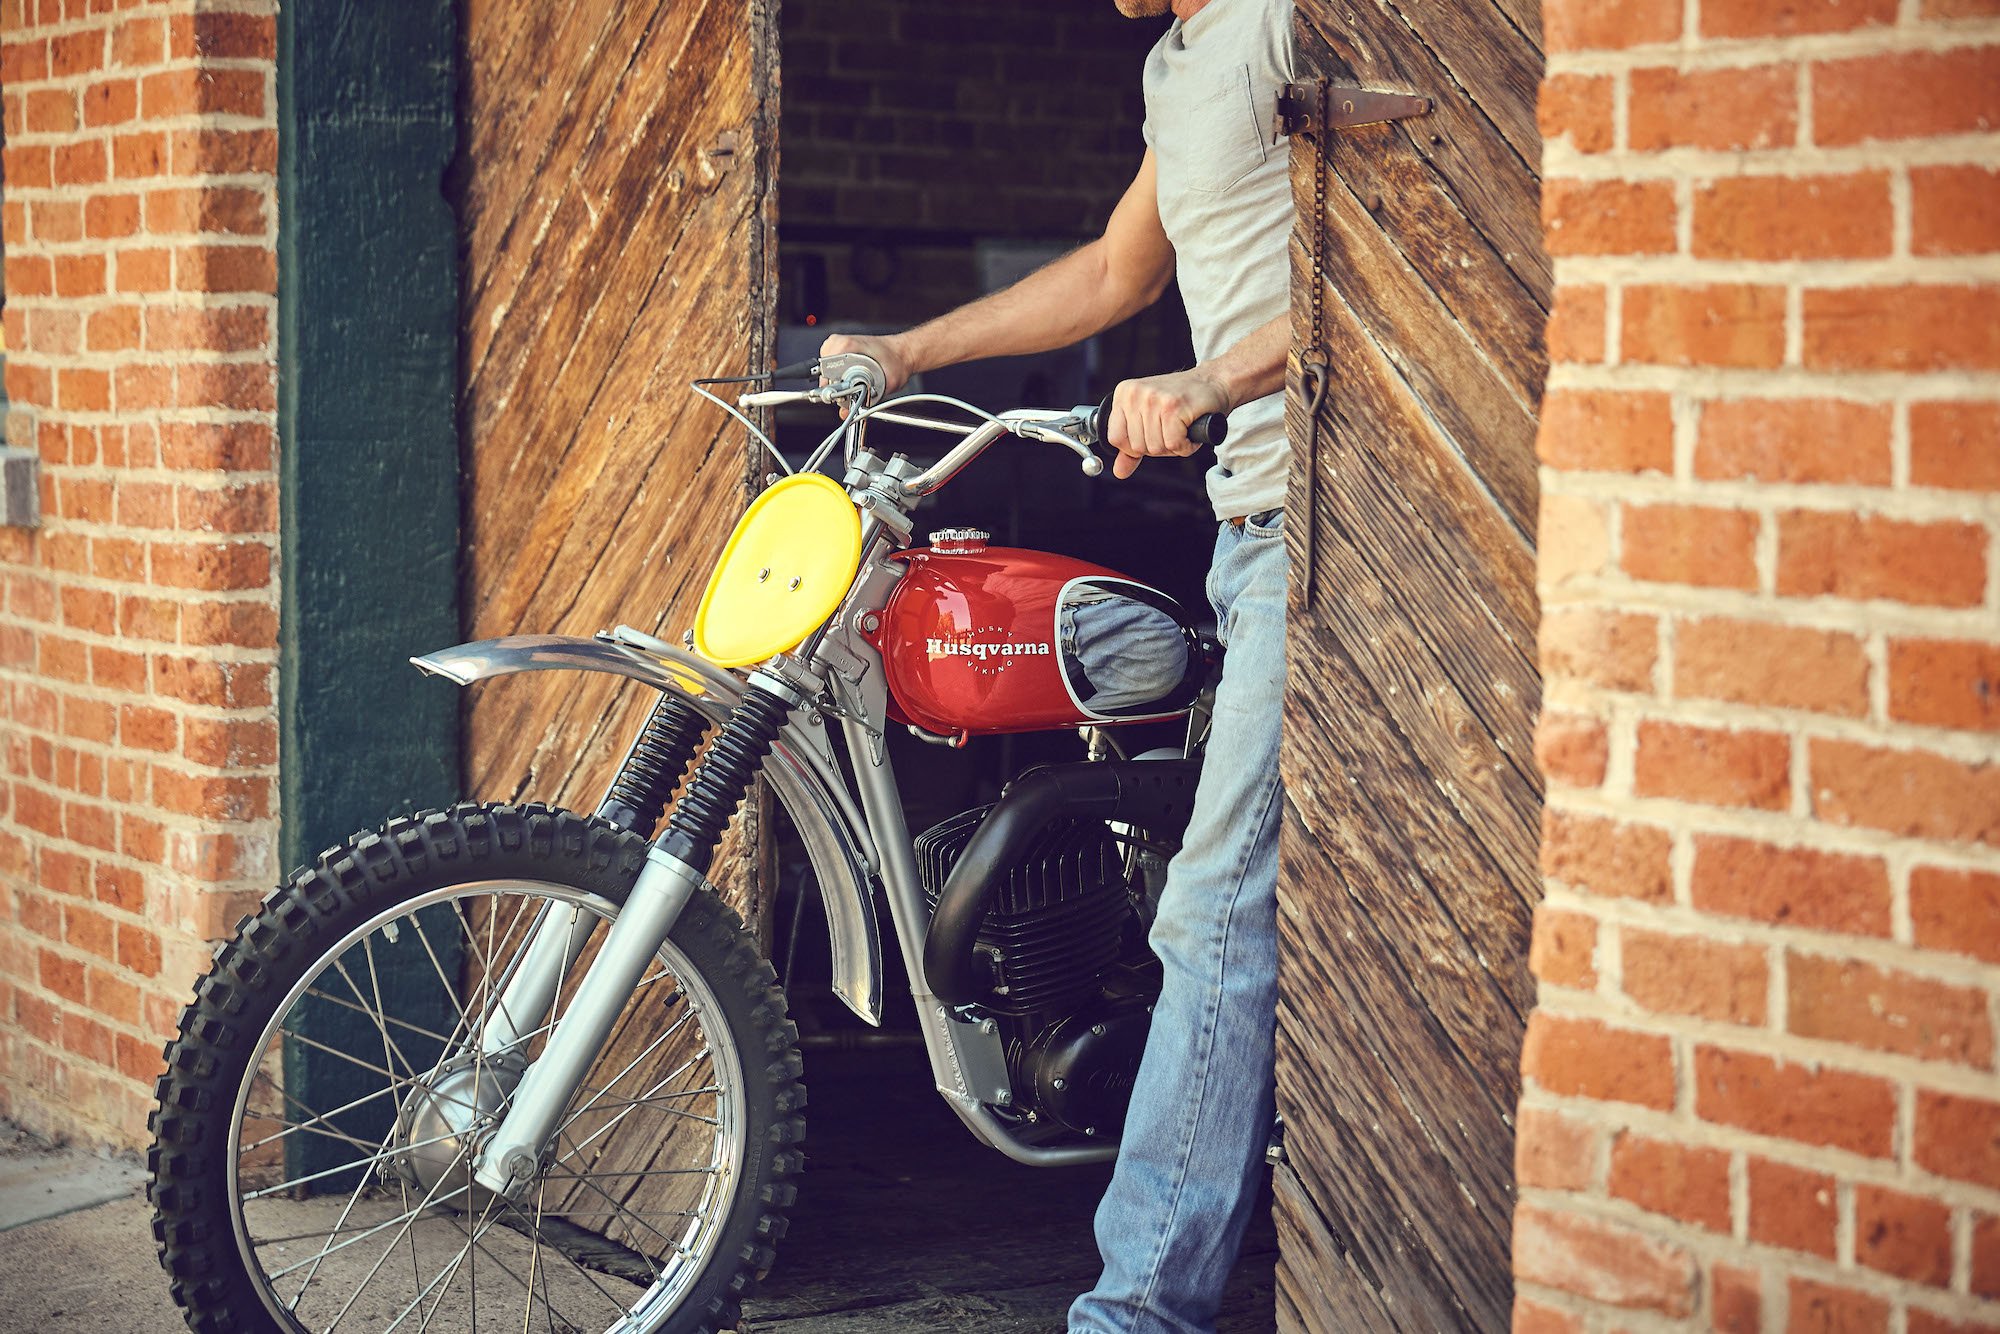 STEVE MCQUEEN'S HUSQVARNA DIRT BIKE ON ANY SUNDAY MOTORCYCLE PHOTO RACING CYCLE 